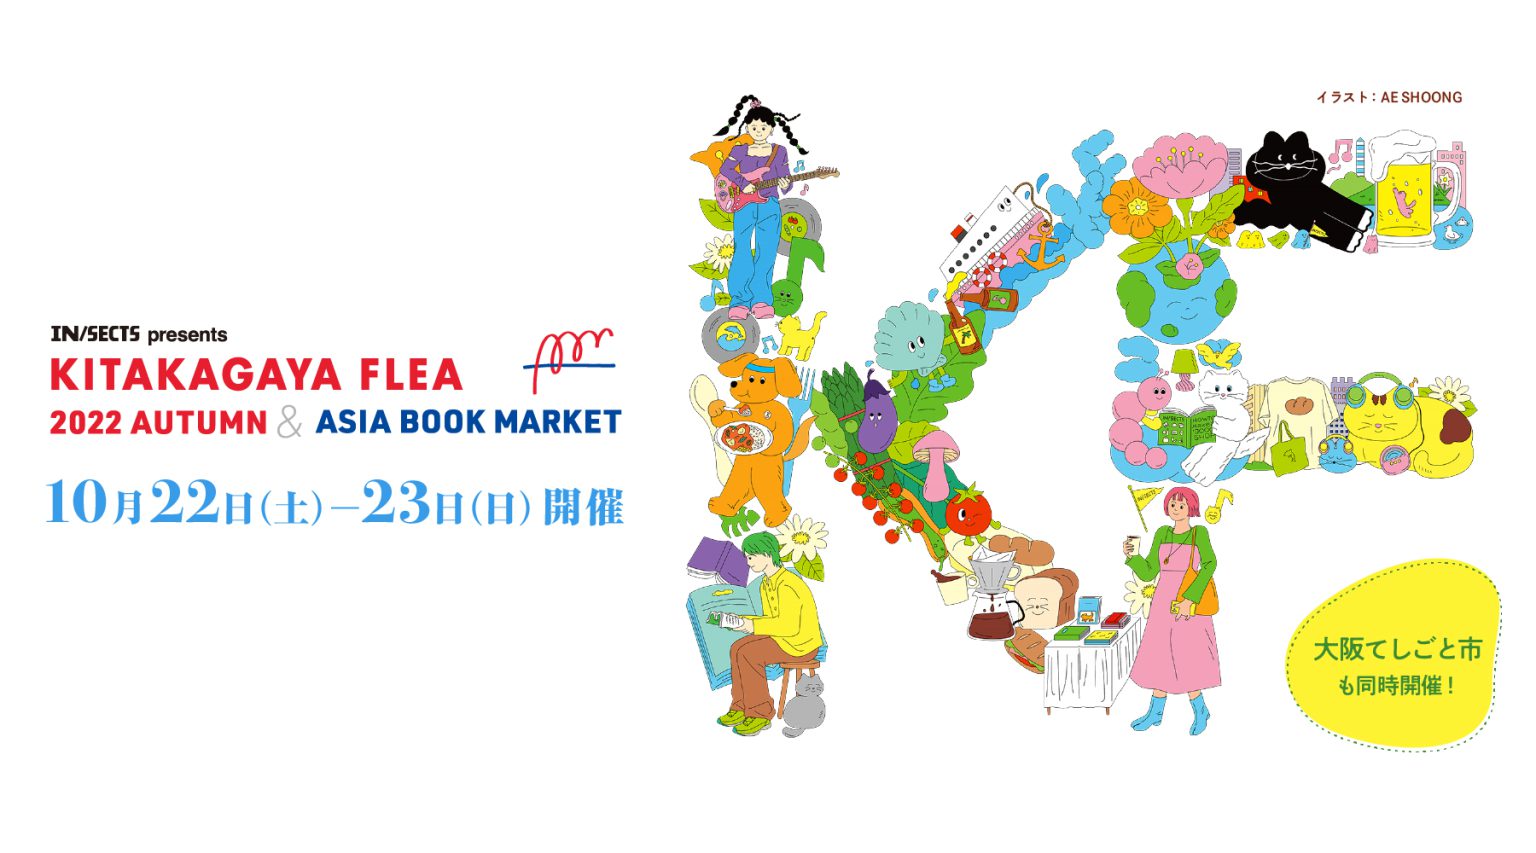 KITAKAGAYA FLEA 2022 AUTUMN & ASIA BOOK MARKET 10月22日（土）・23日（日）に出店します。